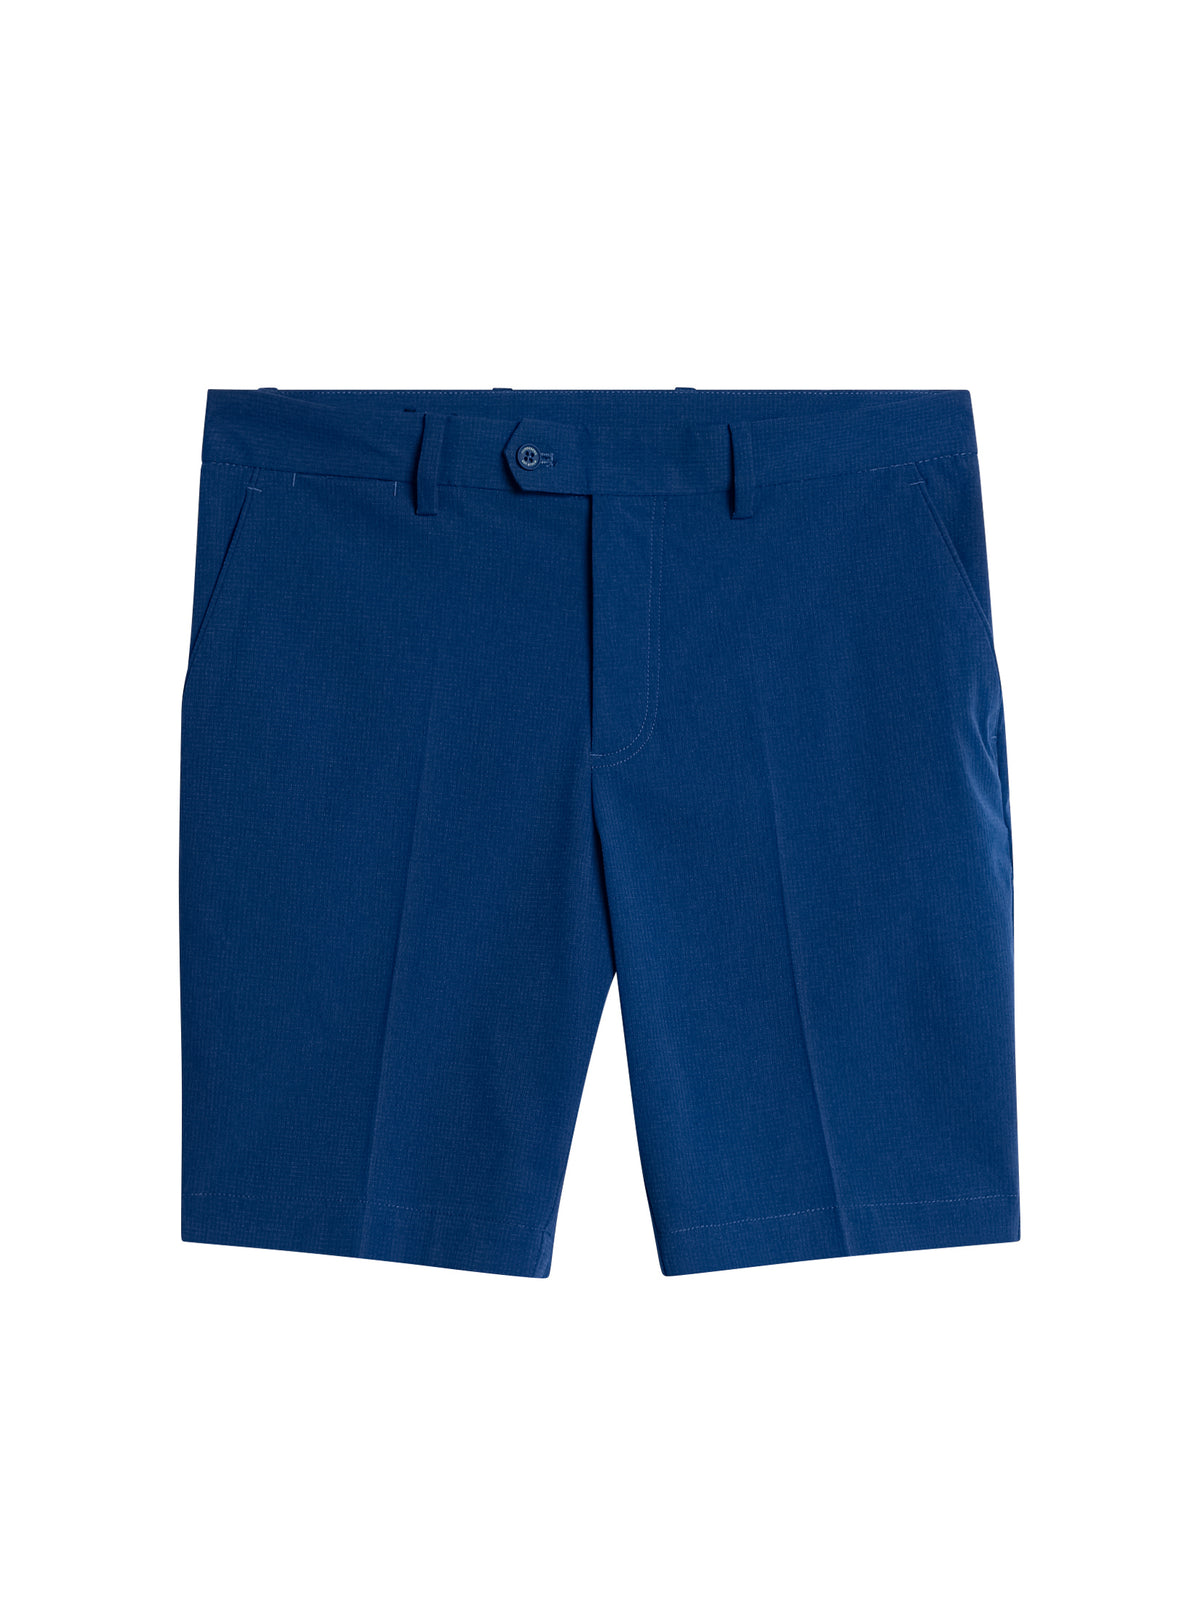 Vent Tight Shorts / Estate Blue